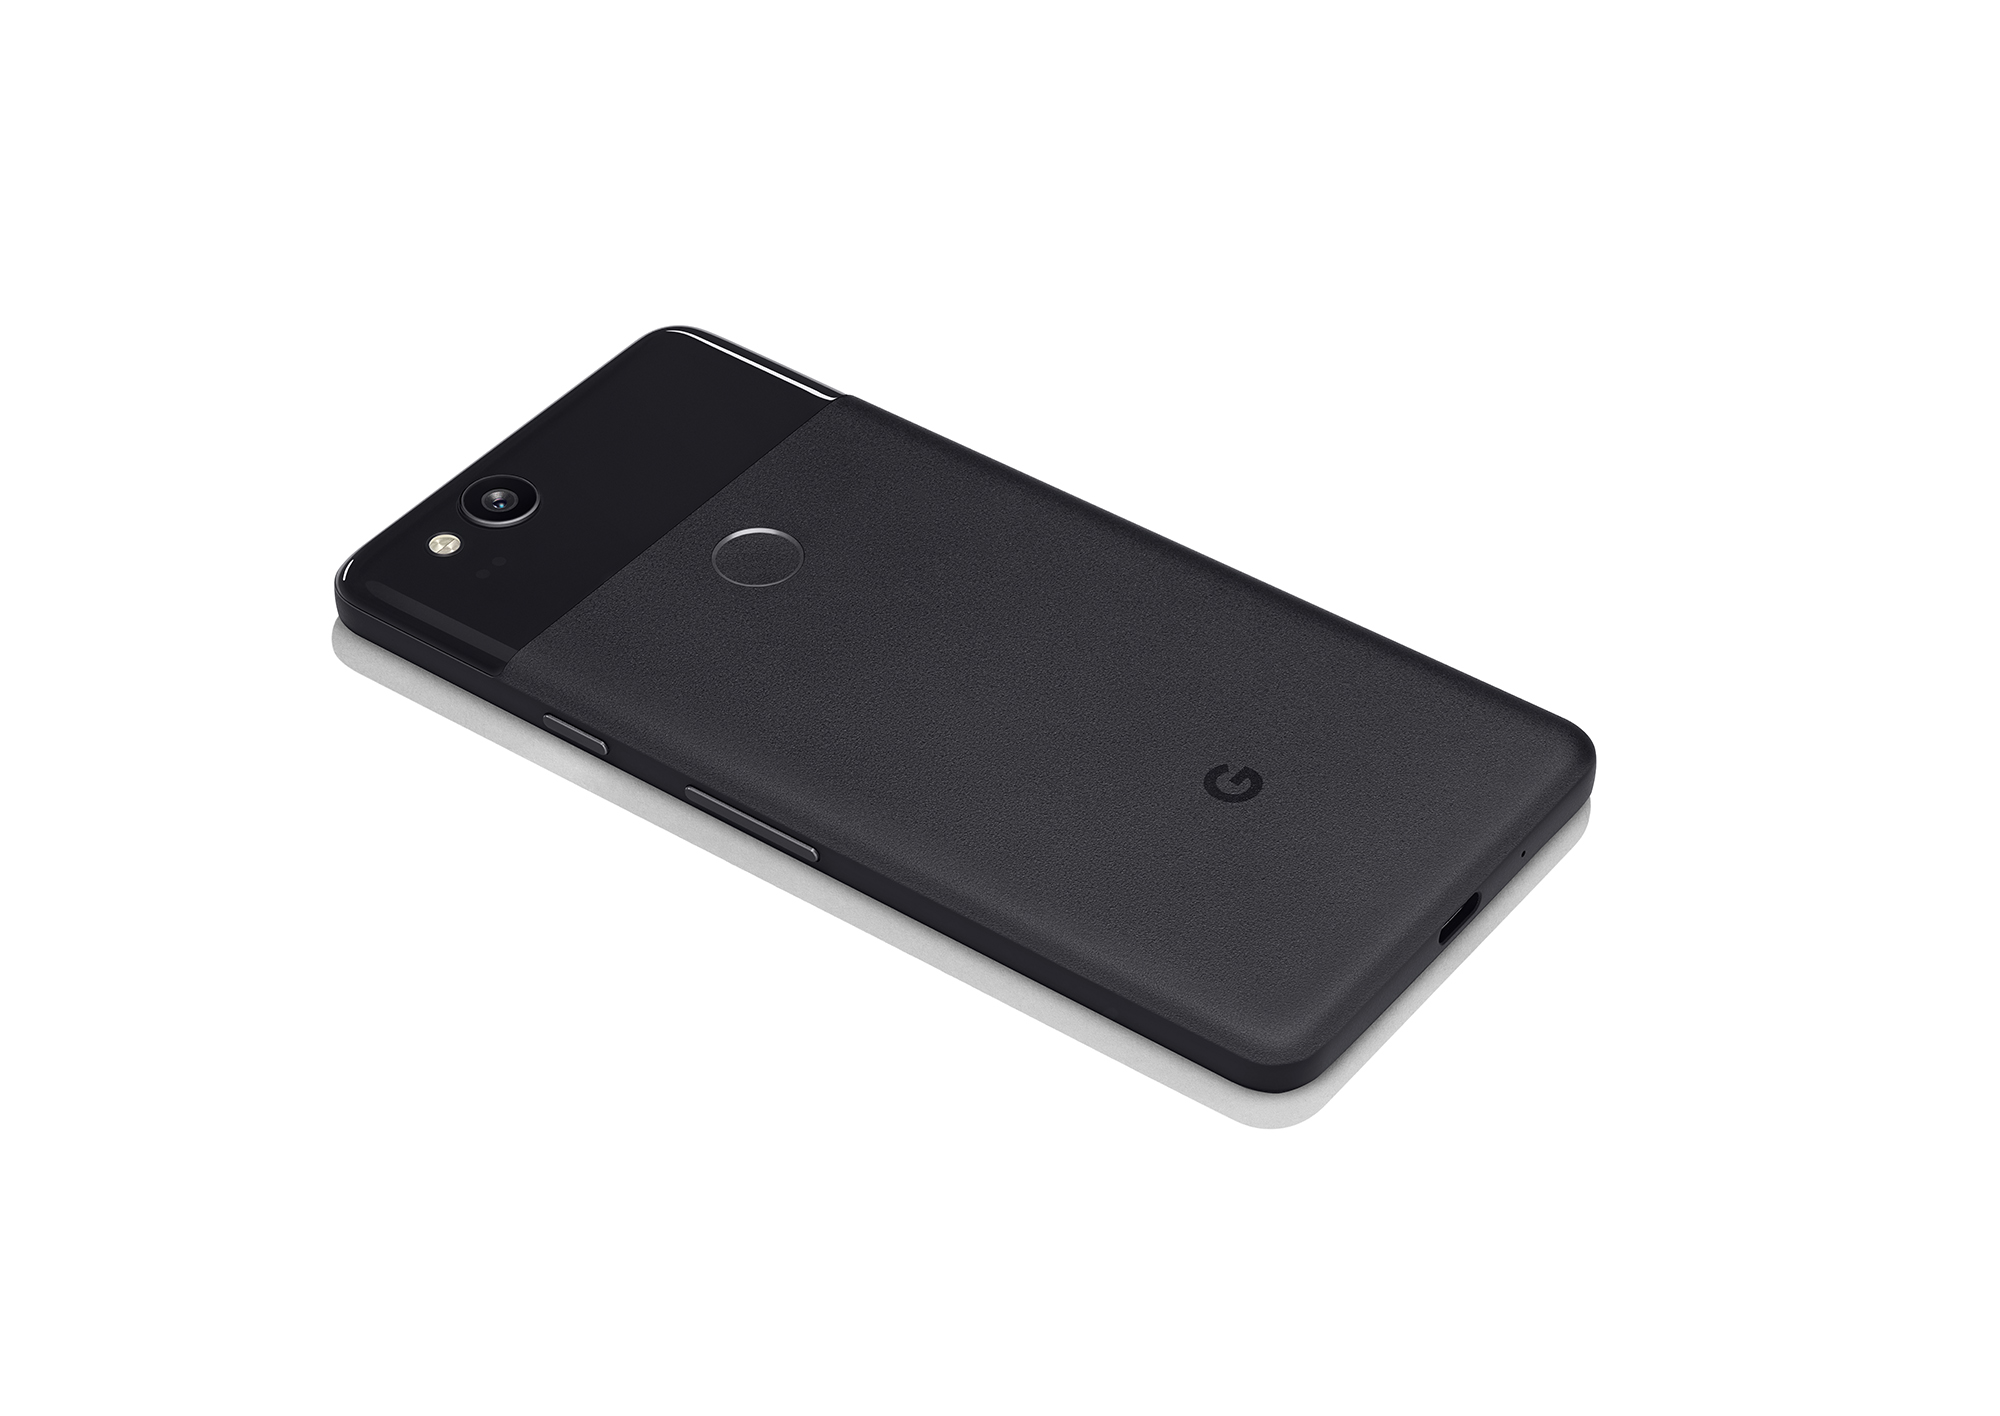 Google Pixel 2 64GB Verizon Smartphone, Black - image 5 of 7